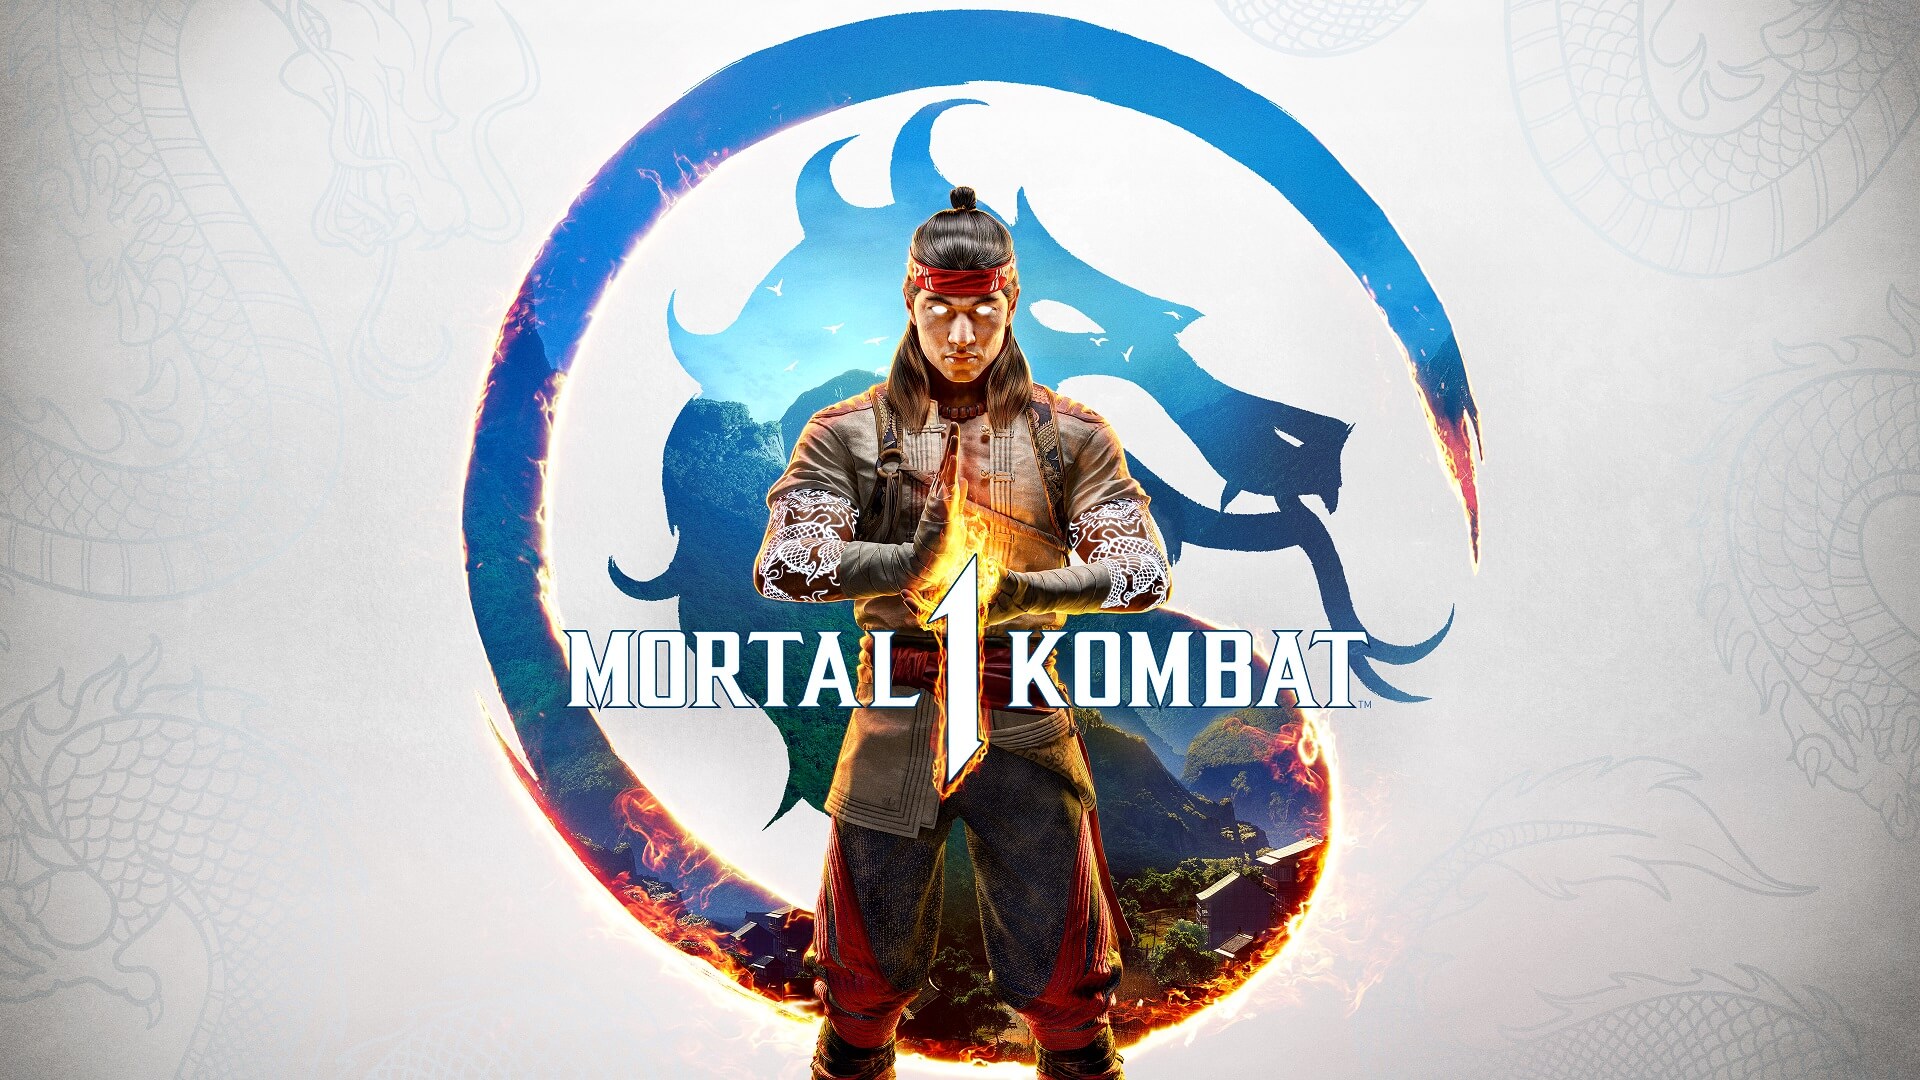 Mortal Kombat 1 has been officially announced!